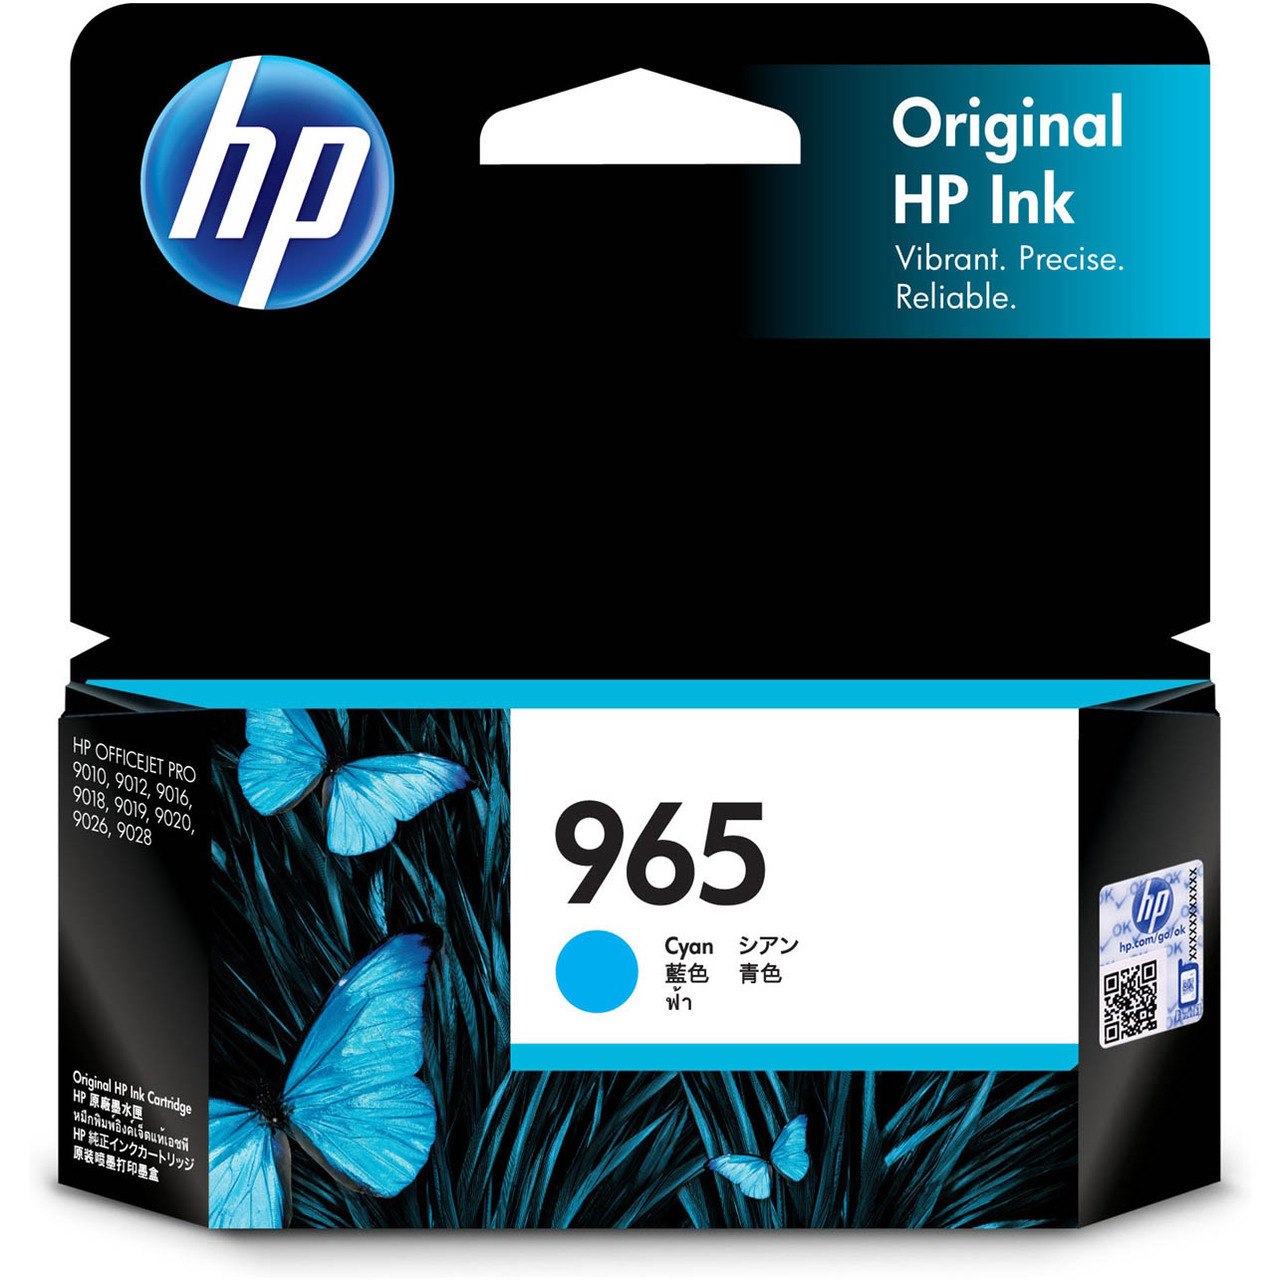 HP 965 Original Ink Cartridge - Cyan